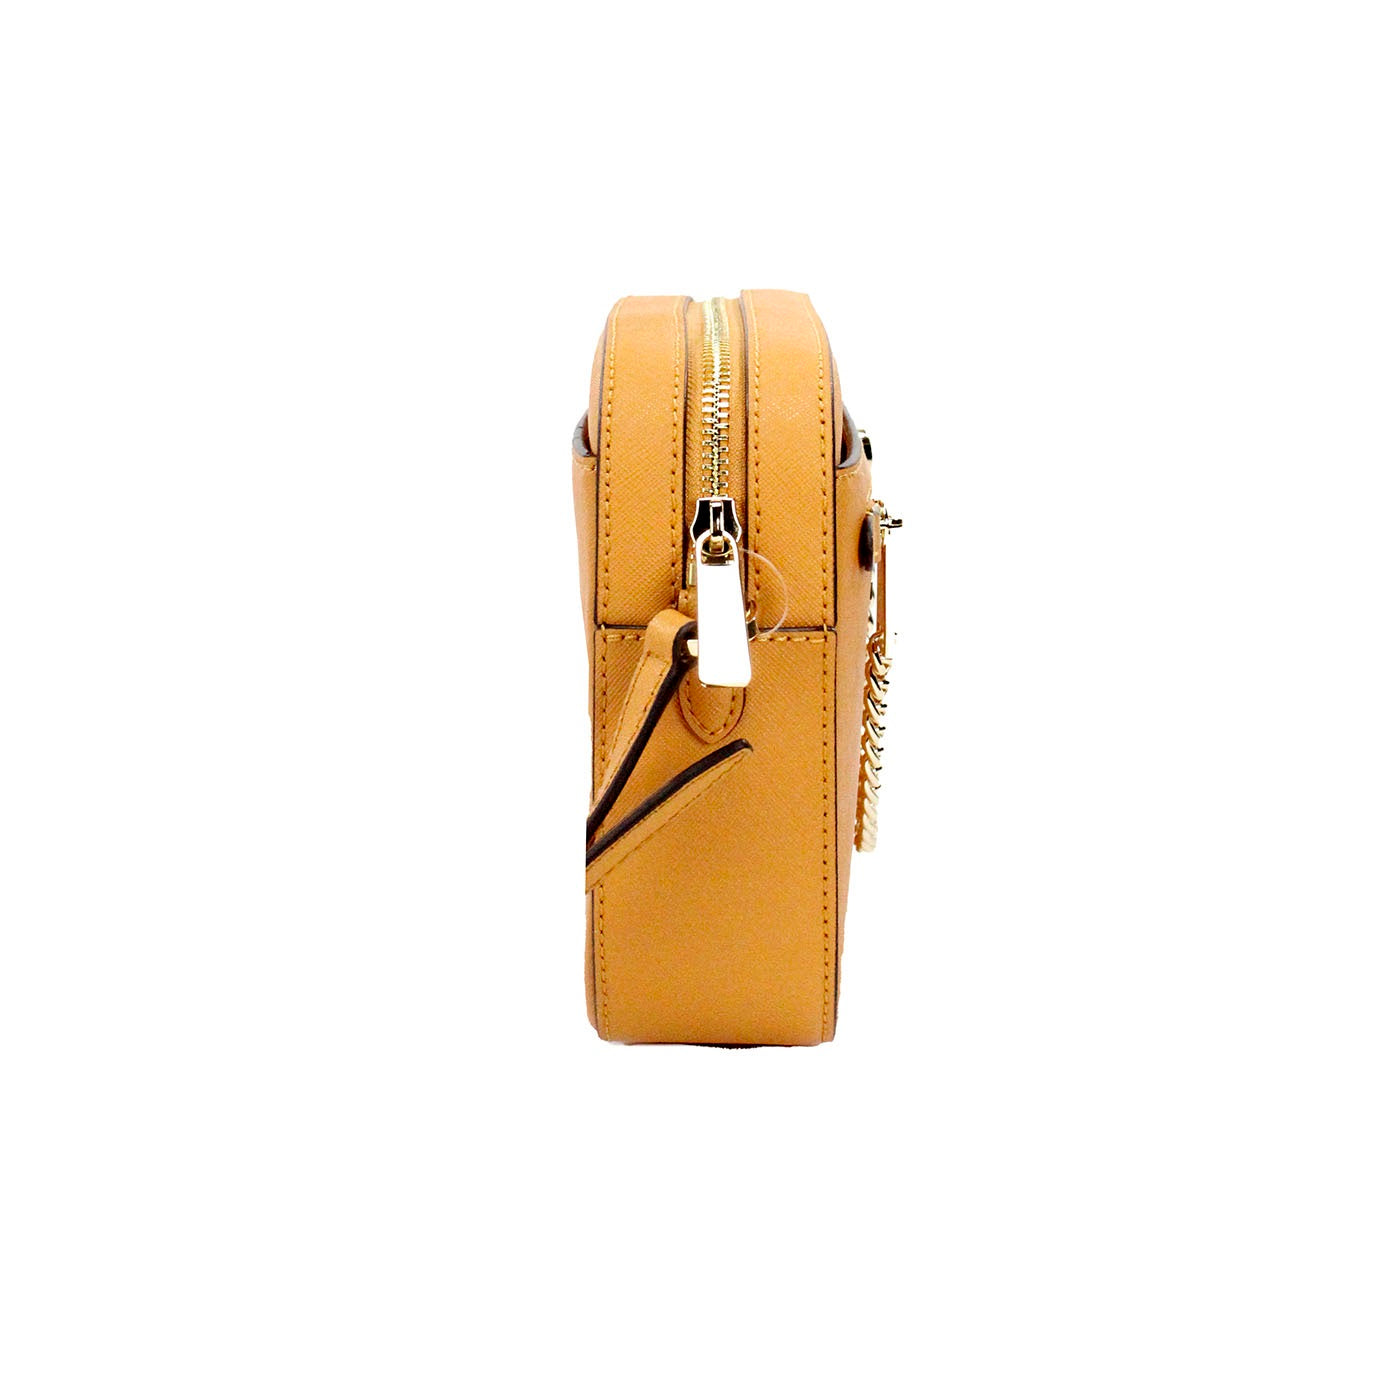 Michael Kors Jet Set East West Large Cider Leather Zip Chain Crossbody Bag | Fashionsarah.com